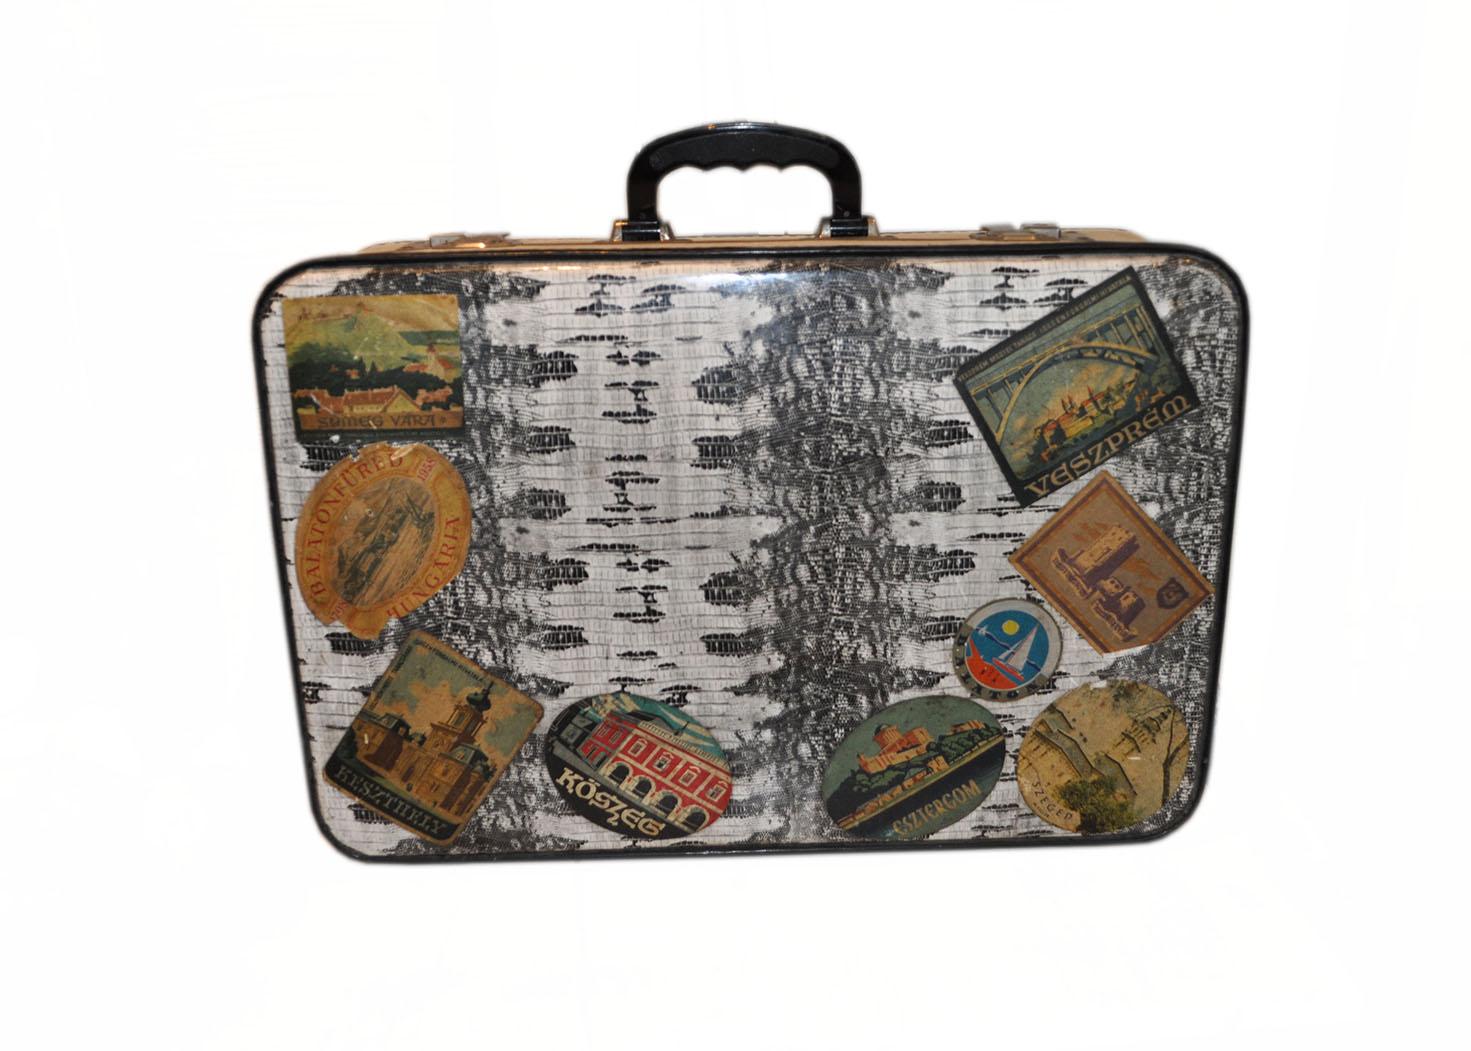 1960s suitcase